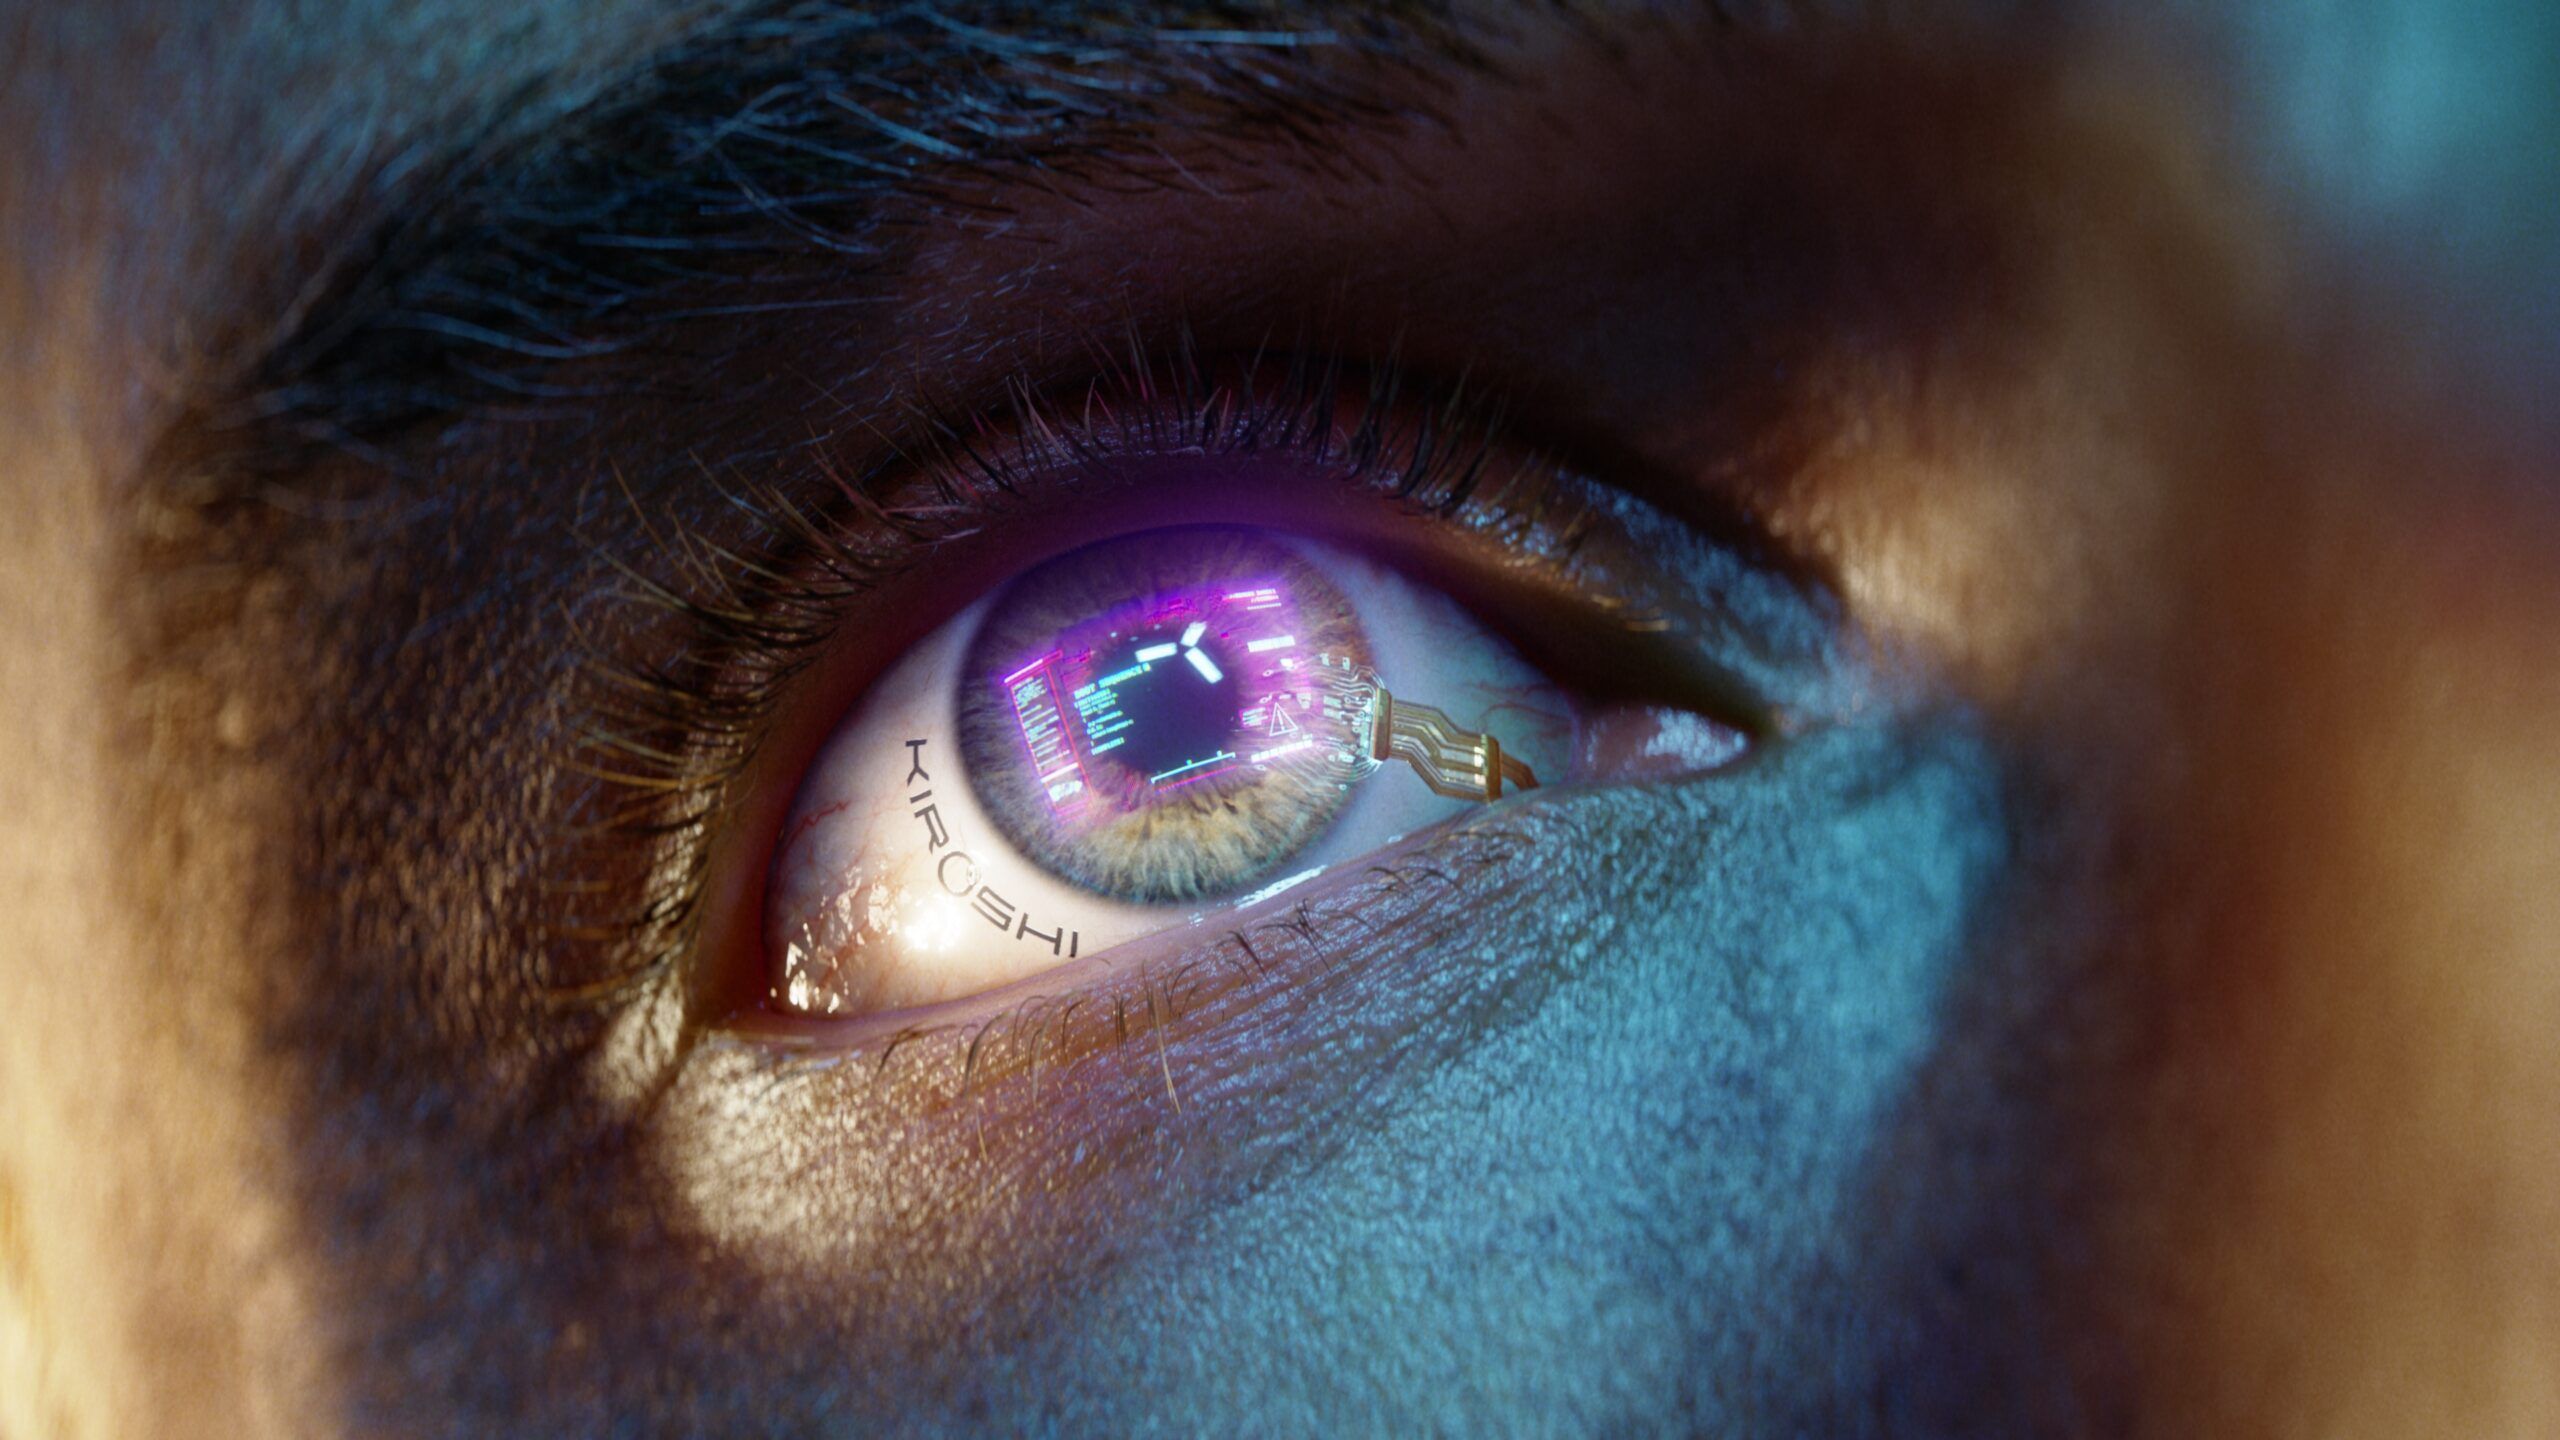 Cyberpunk 2077 close up of eye looking at light